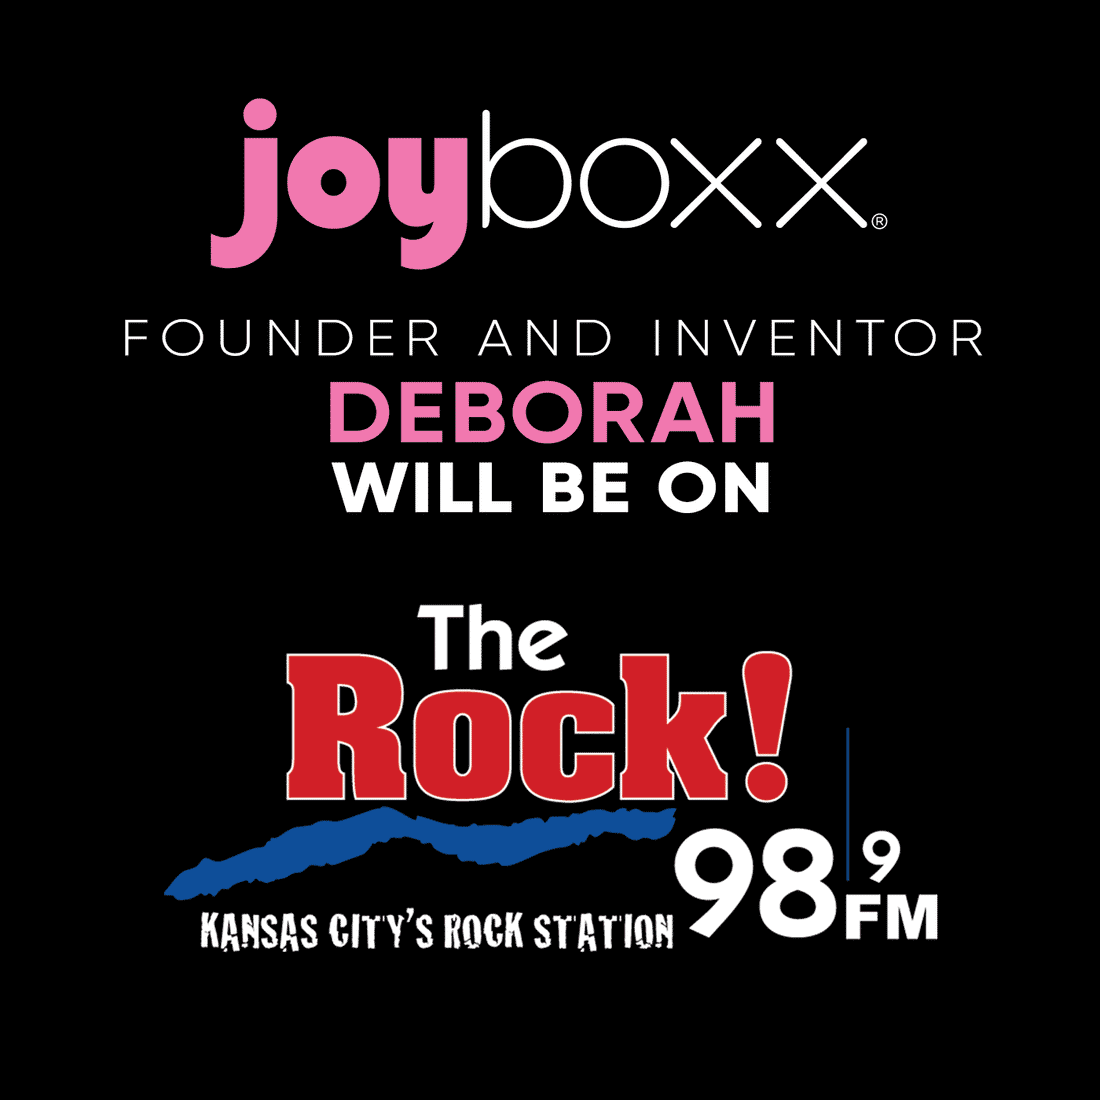 Joyboxx Founder to Appear on Kansas City Radio Show Tuesday Morning